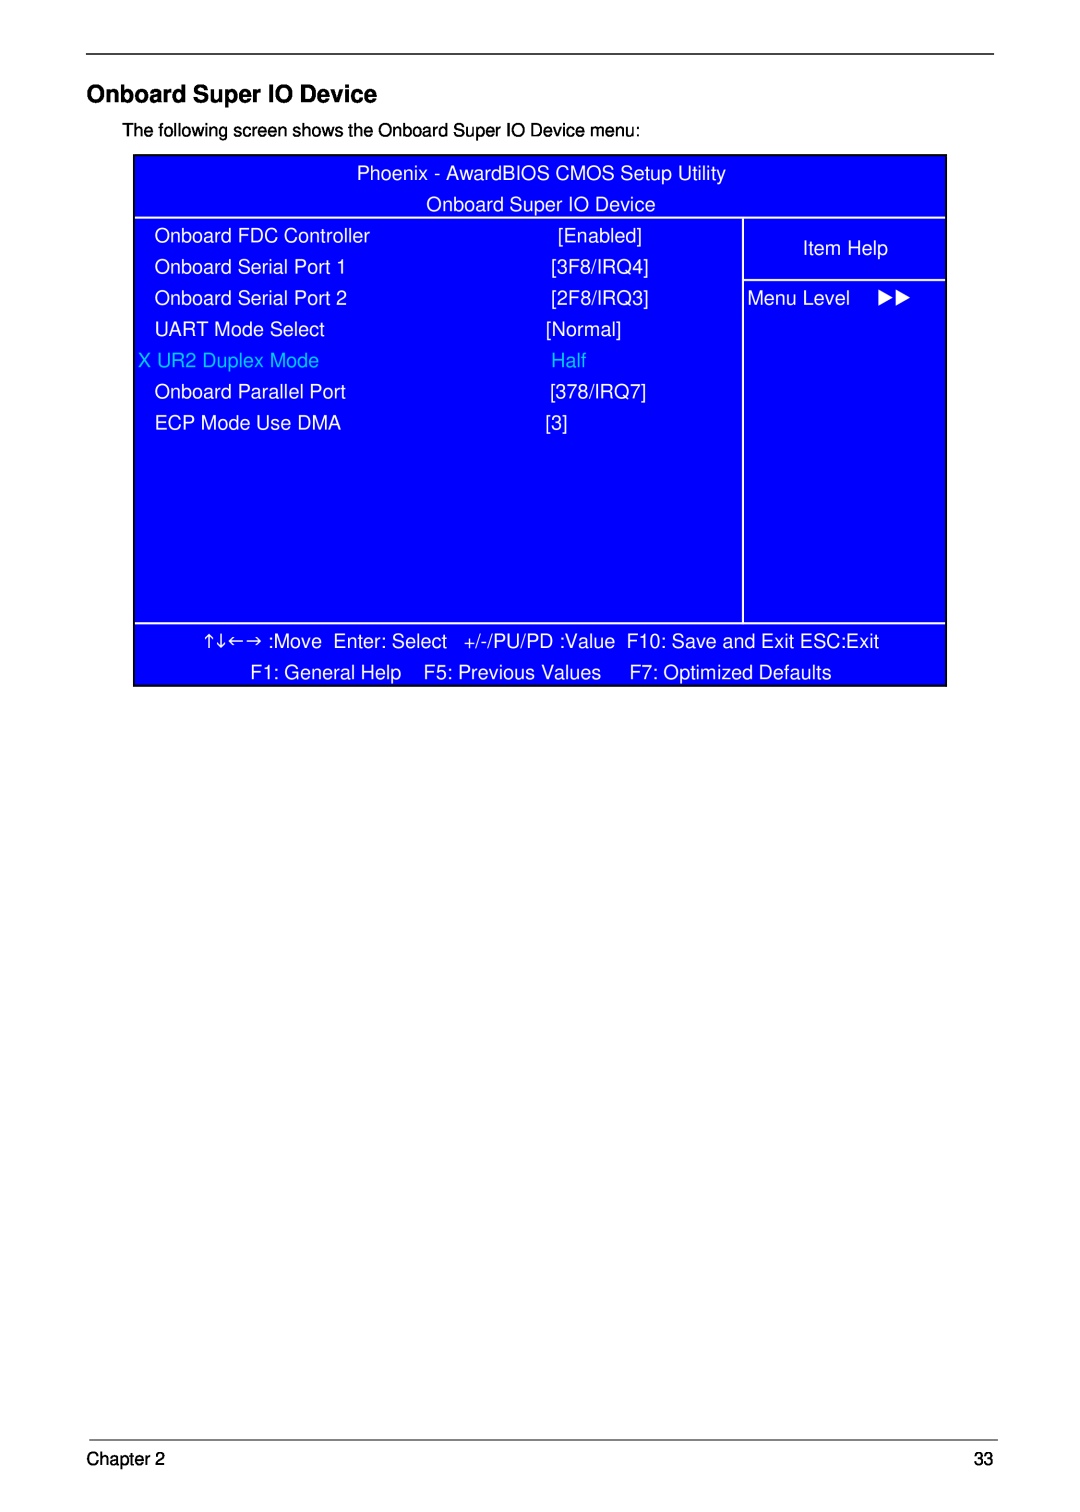 Aspire Digital M261, M1610 manual Onboard Super IO Device, X UR2 Duplex Mode, Half 